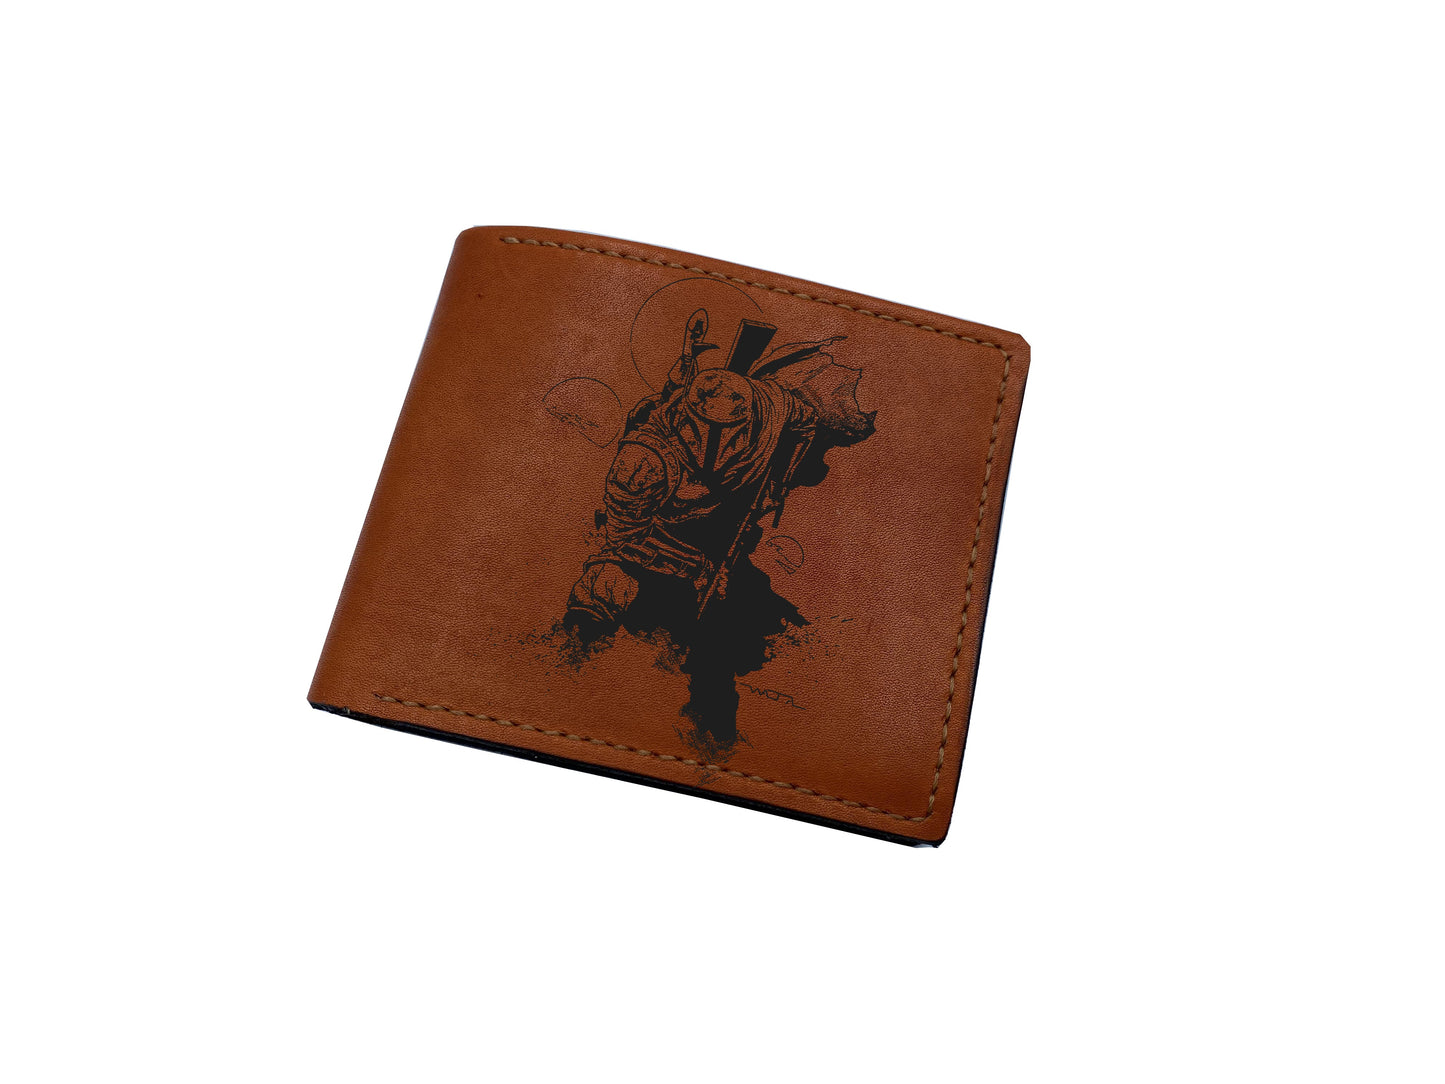 Personalized Mandalorian hunter leather wallet, Starwars leather gift for men, Bounty Hunter Mandalorian series present, christmas gift ideas